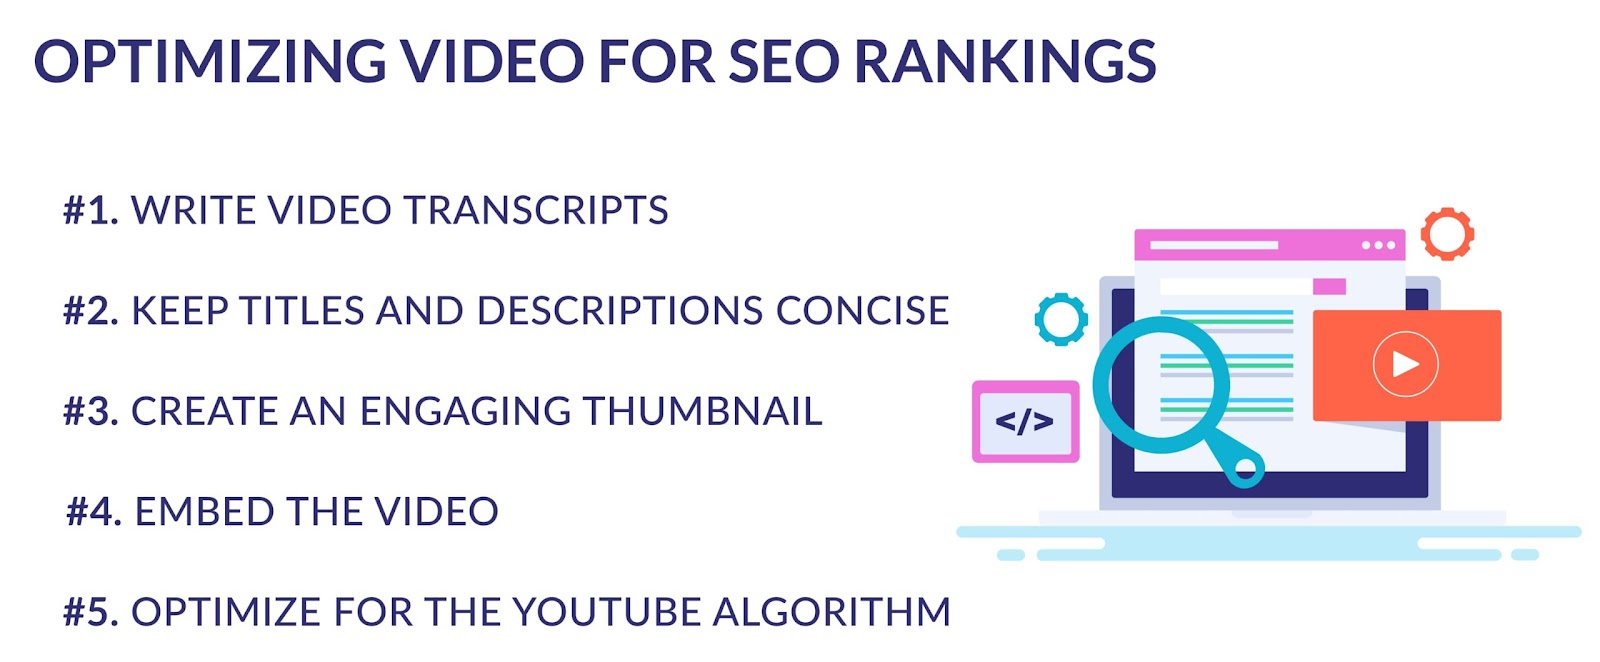 Optimizing Video for SEO Rankings